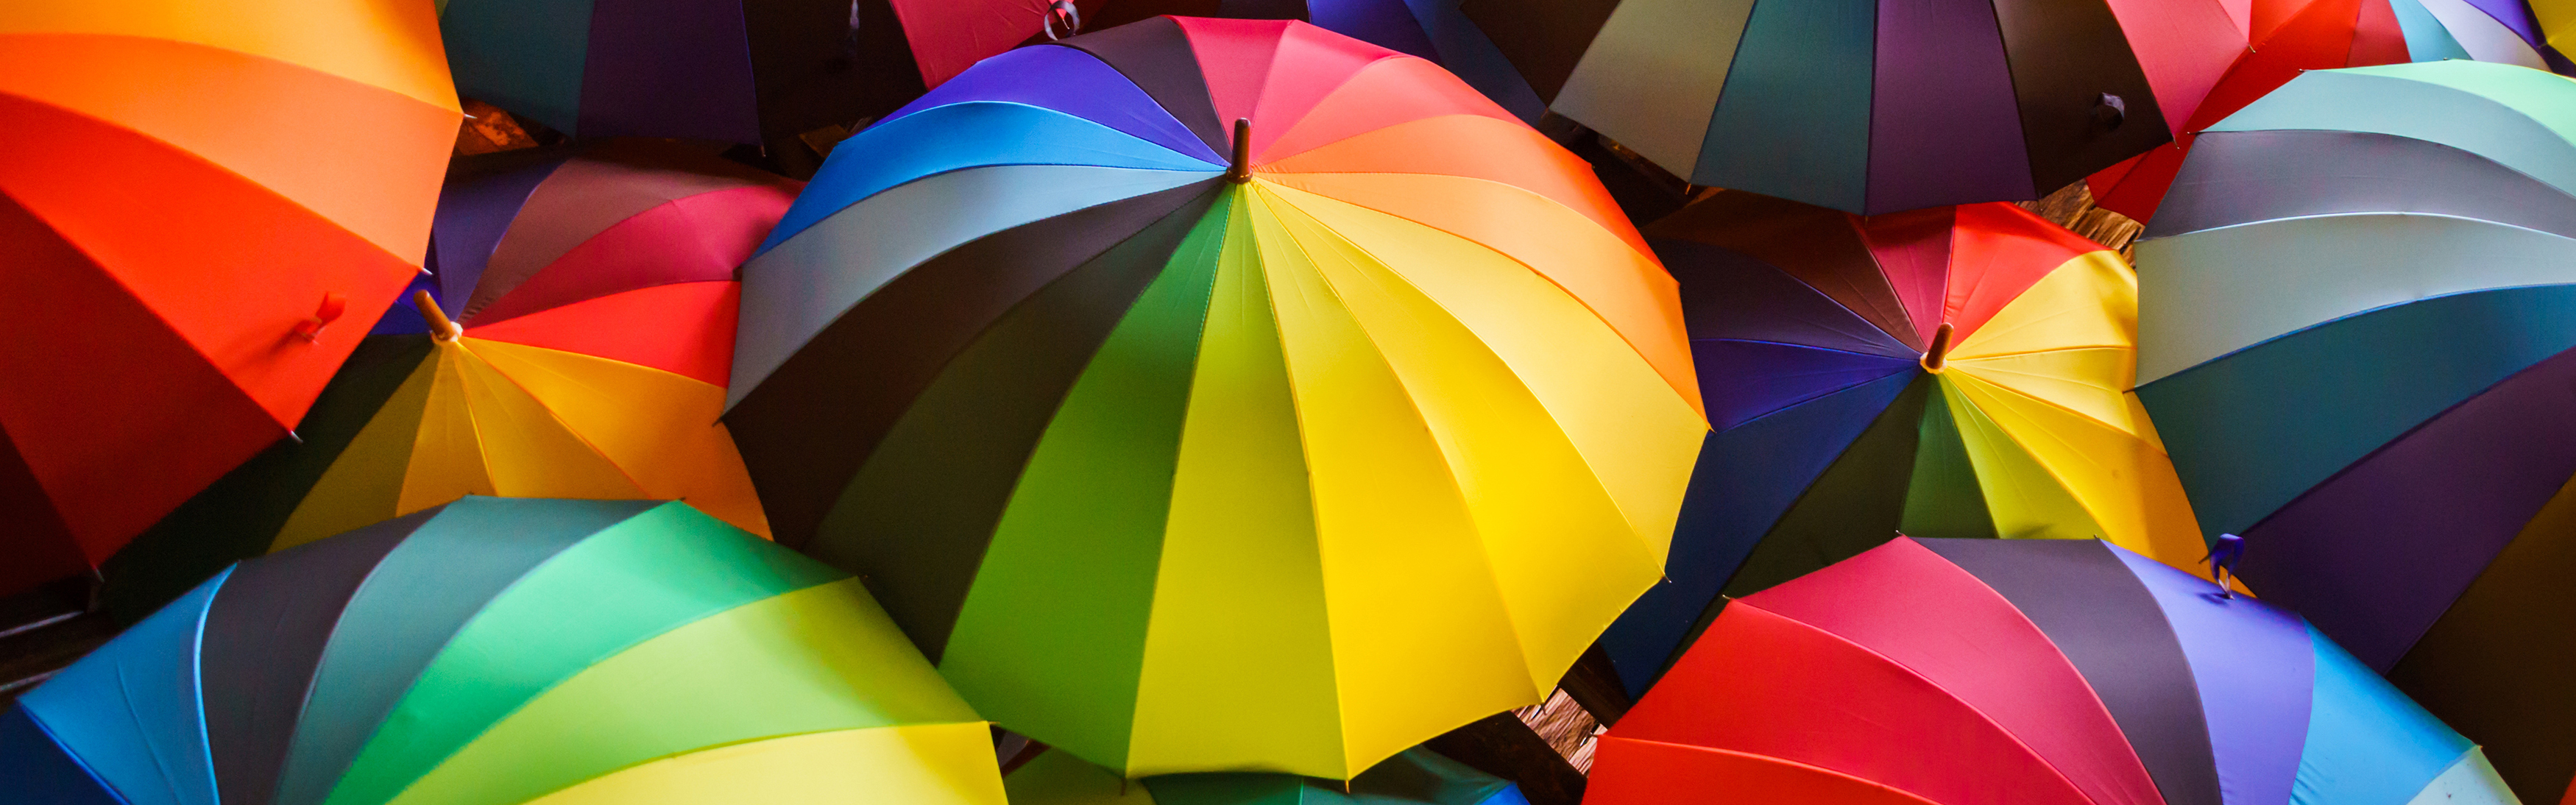 Diversity - multicoloured umbrellas grouped together